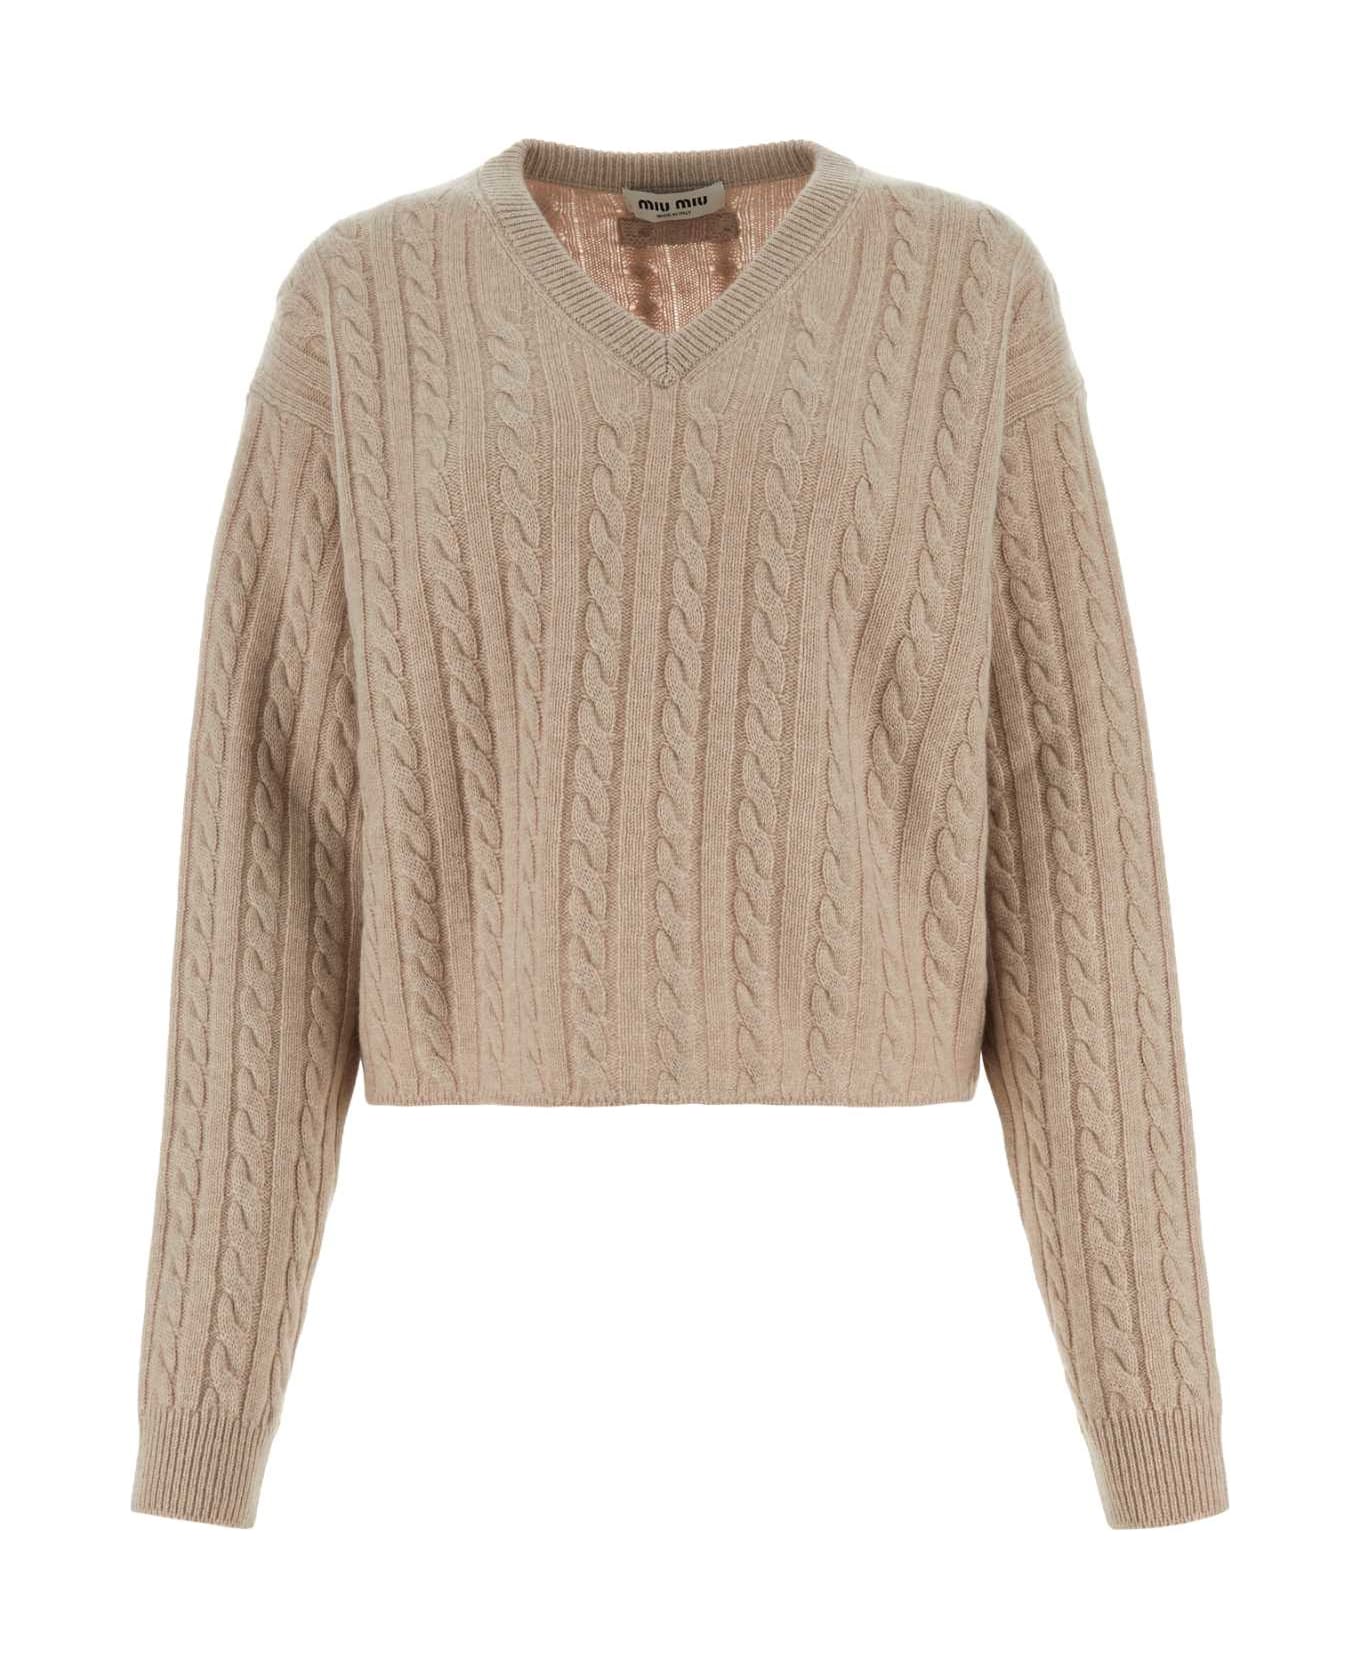 Miu Miu Sand Cashmere Sweater - CALCE ニットウェア